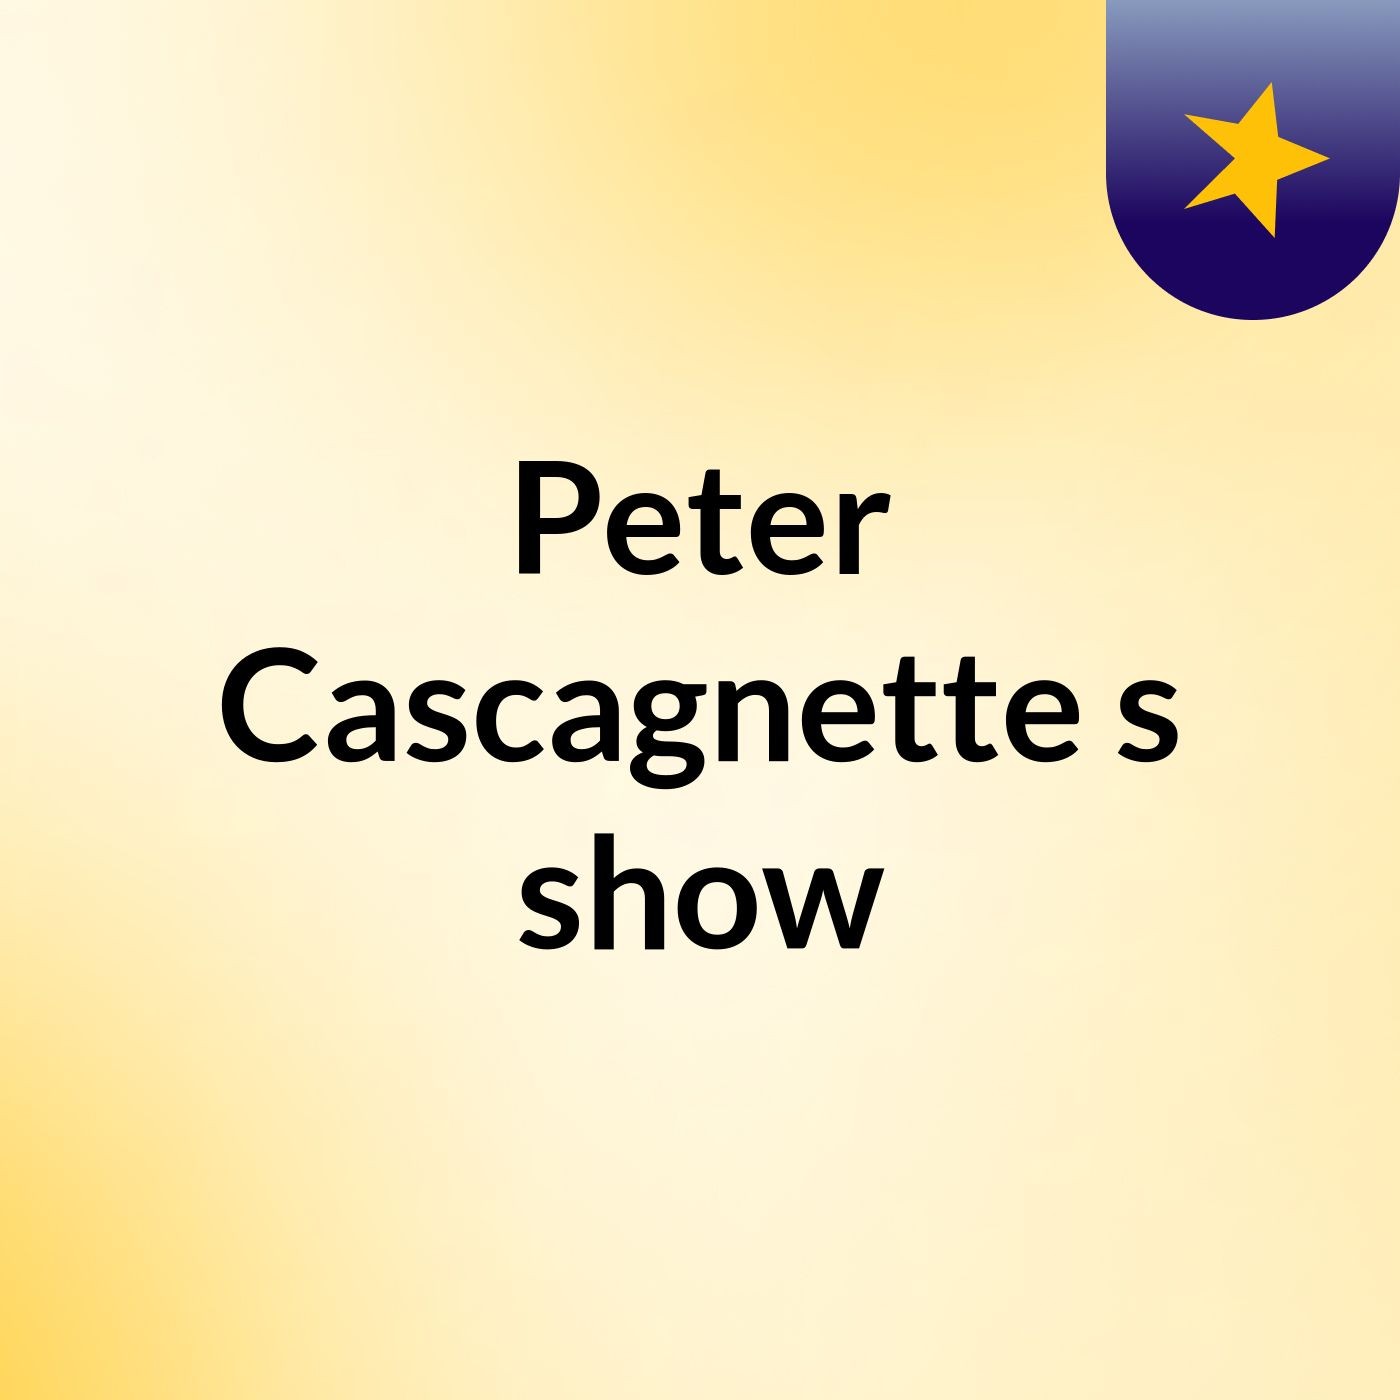 Peter Cascagnette's show